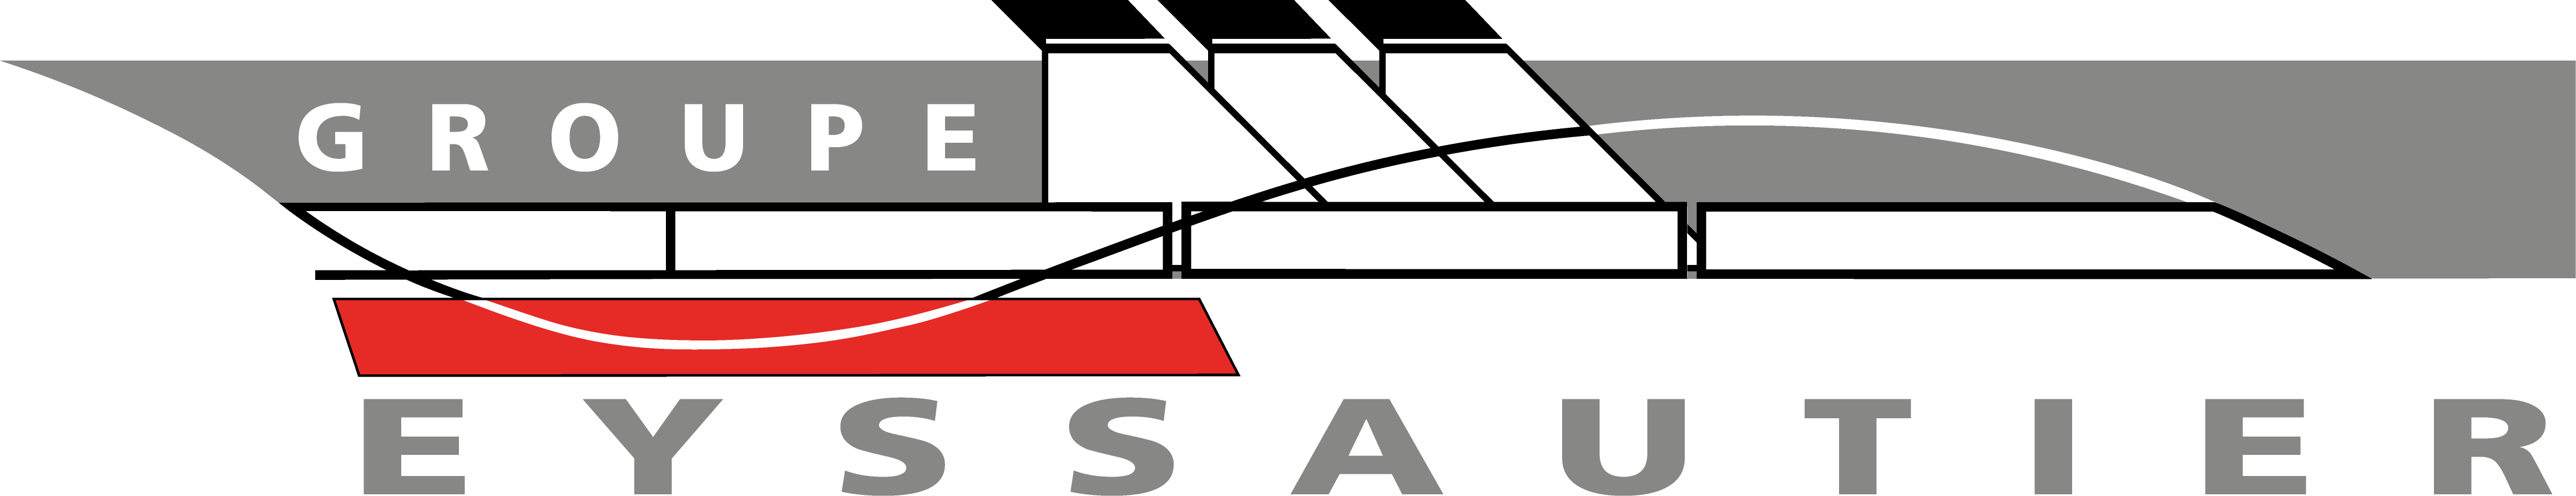 Groupe Eyssautier logo